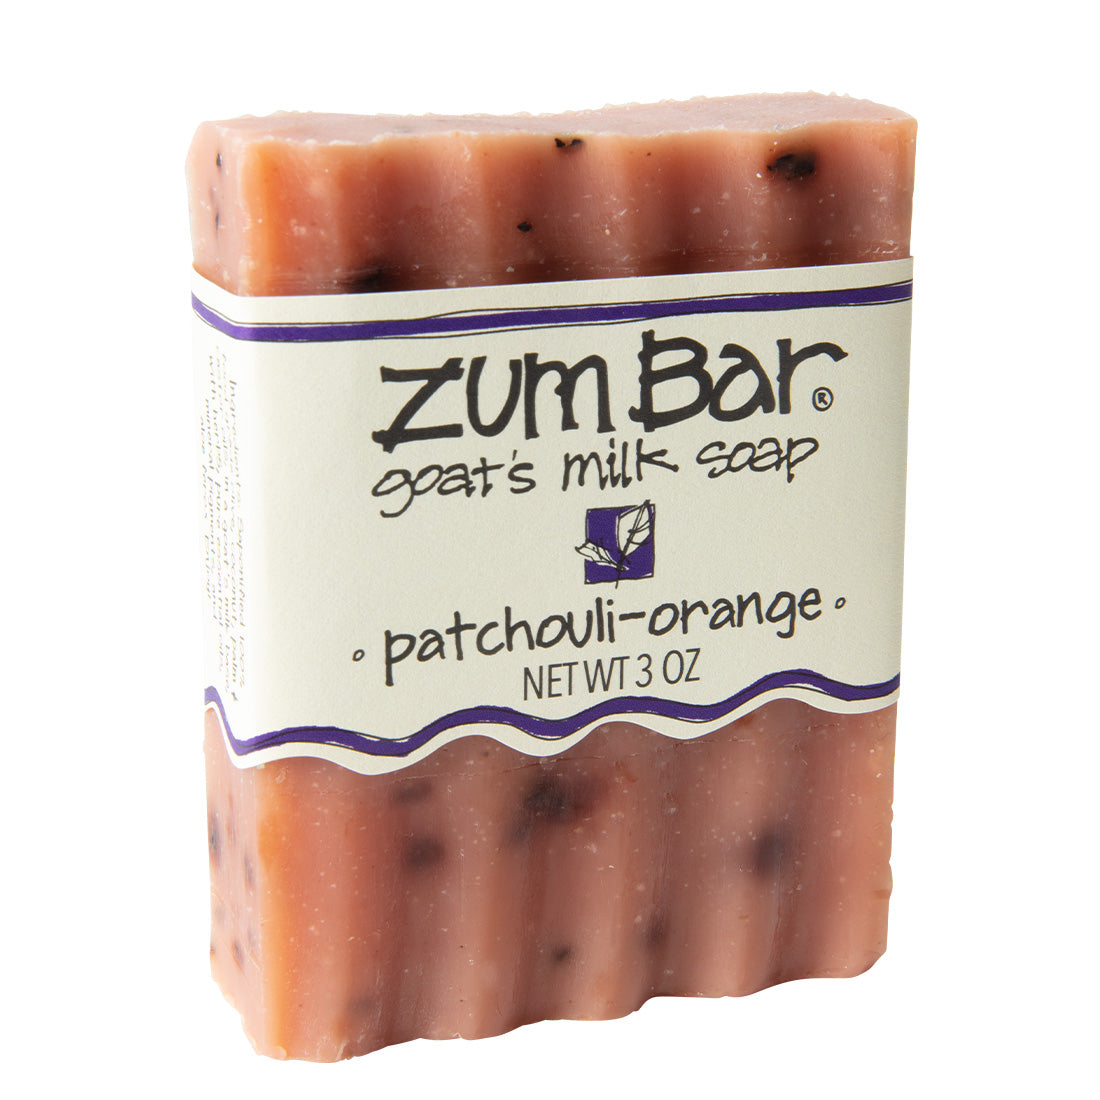 Labeled patchouli-orange scented Zum Bar Soap with speckled orange coloring